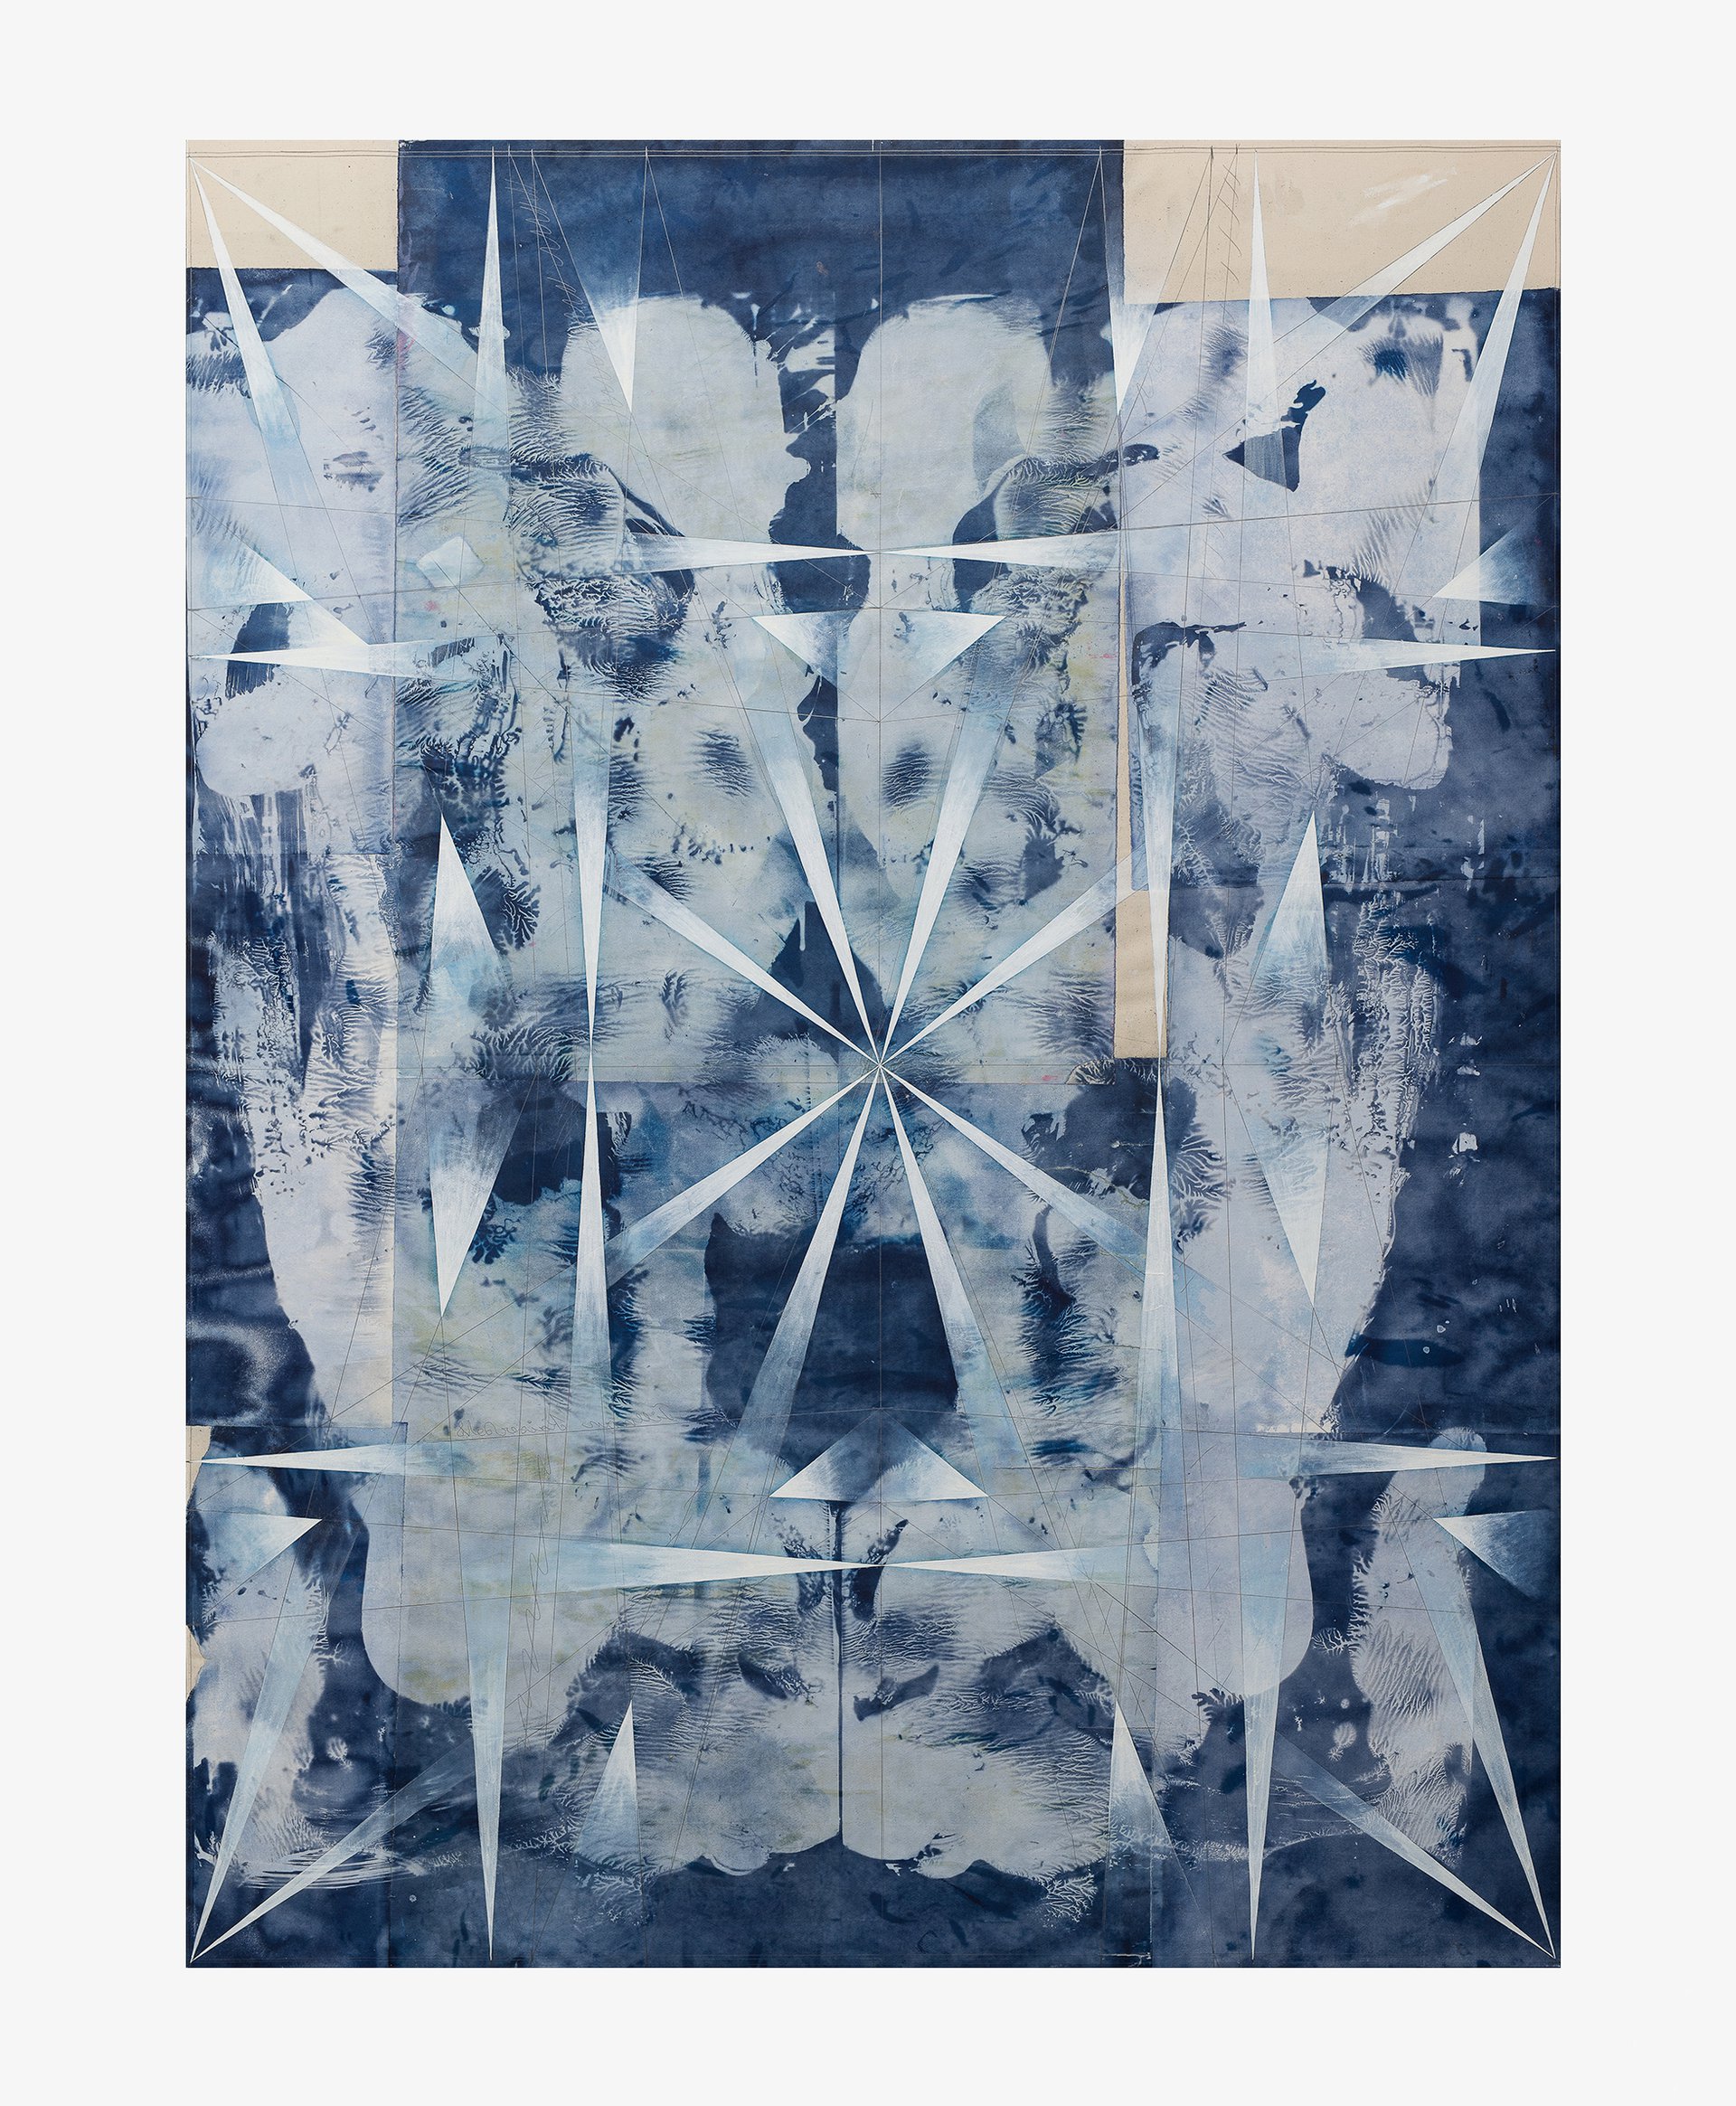 Tillman KaiserMaggot brain, 2018Eggtempera on cyanothypie on paper/canvas200 x 150 cm